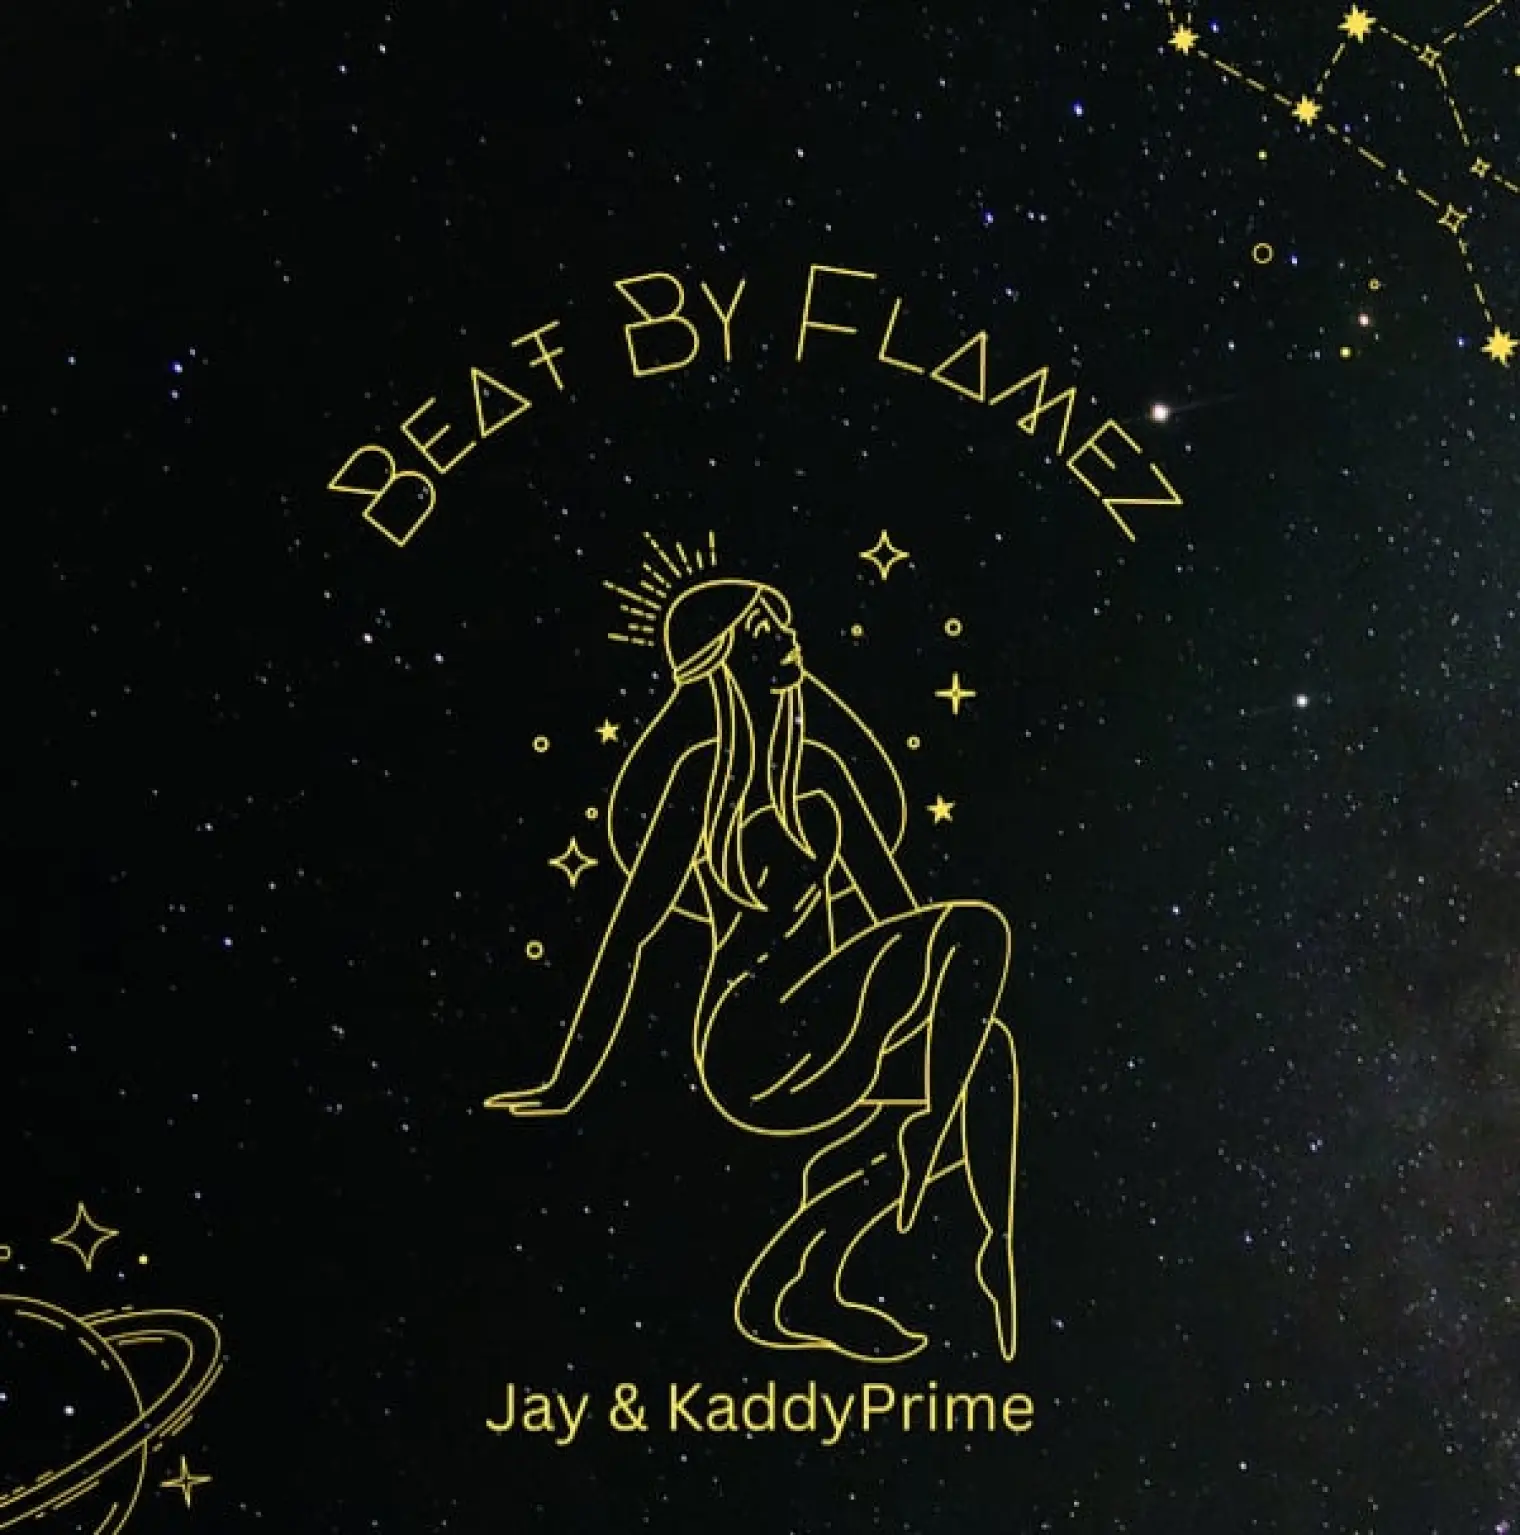 Beat by Flamez -  Jay 